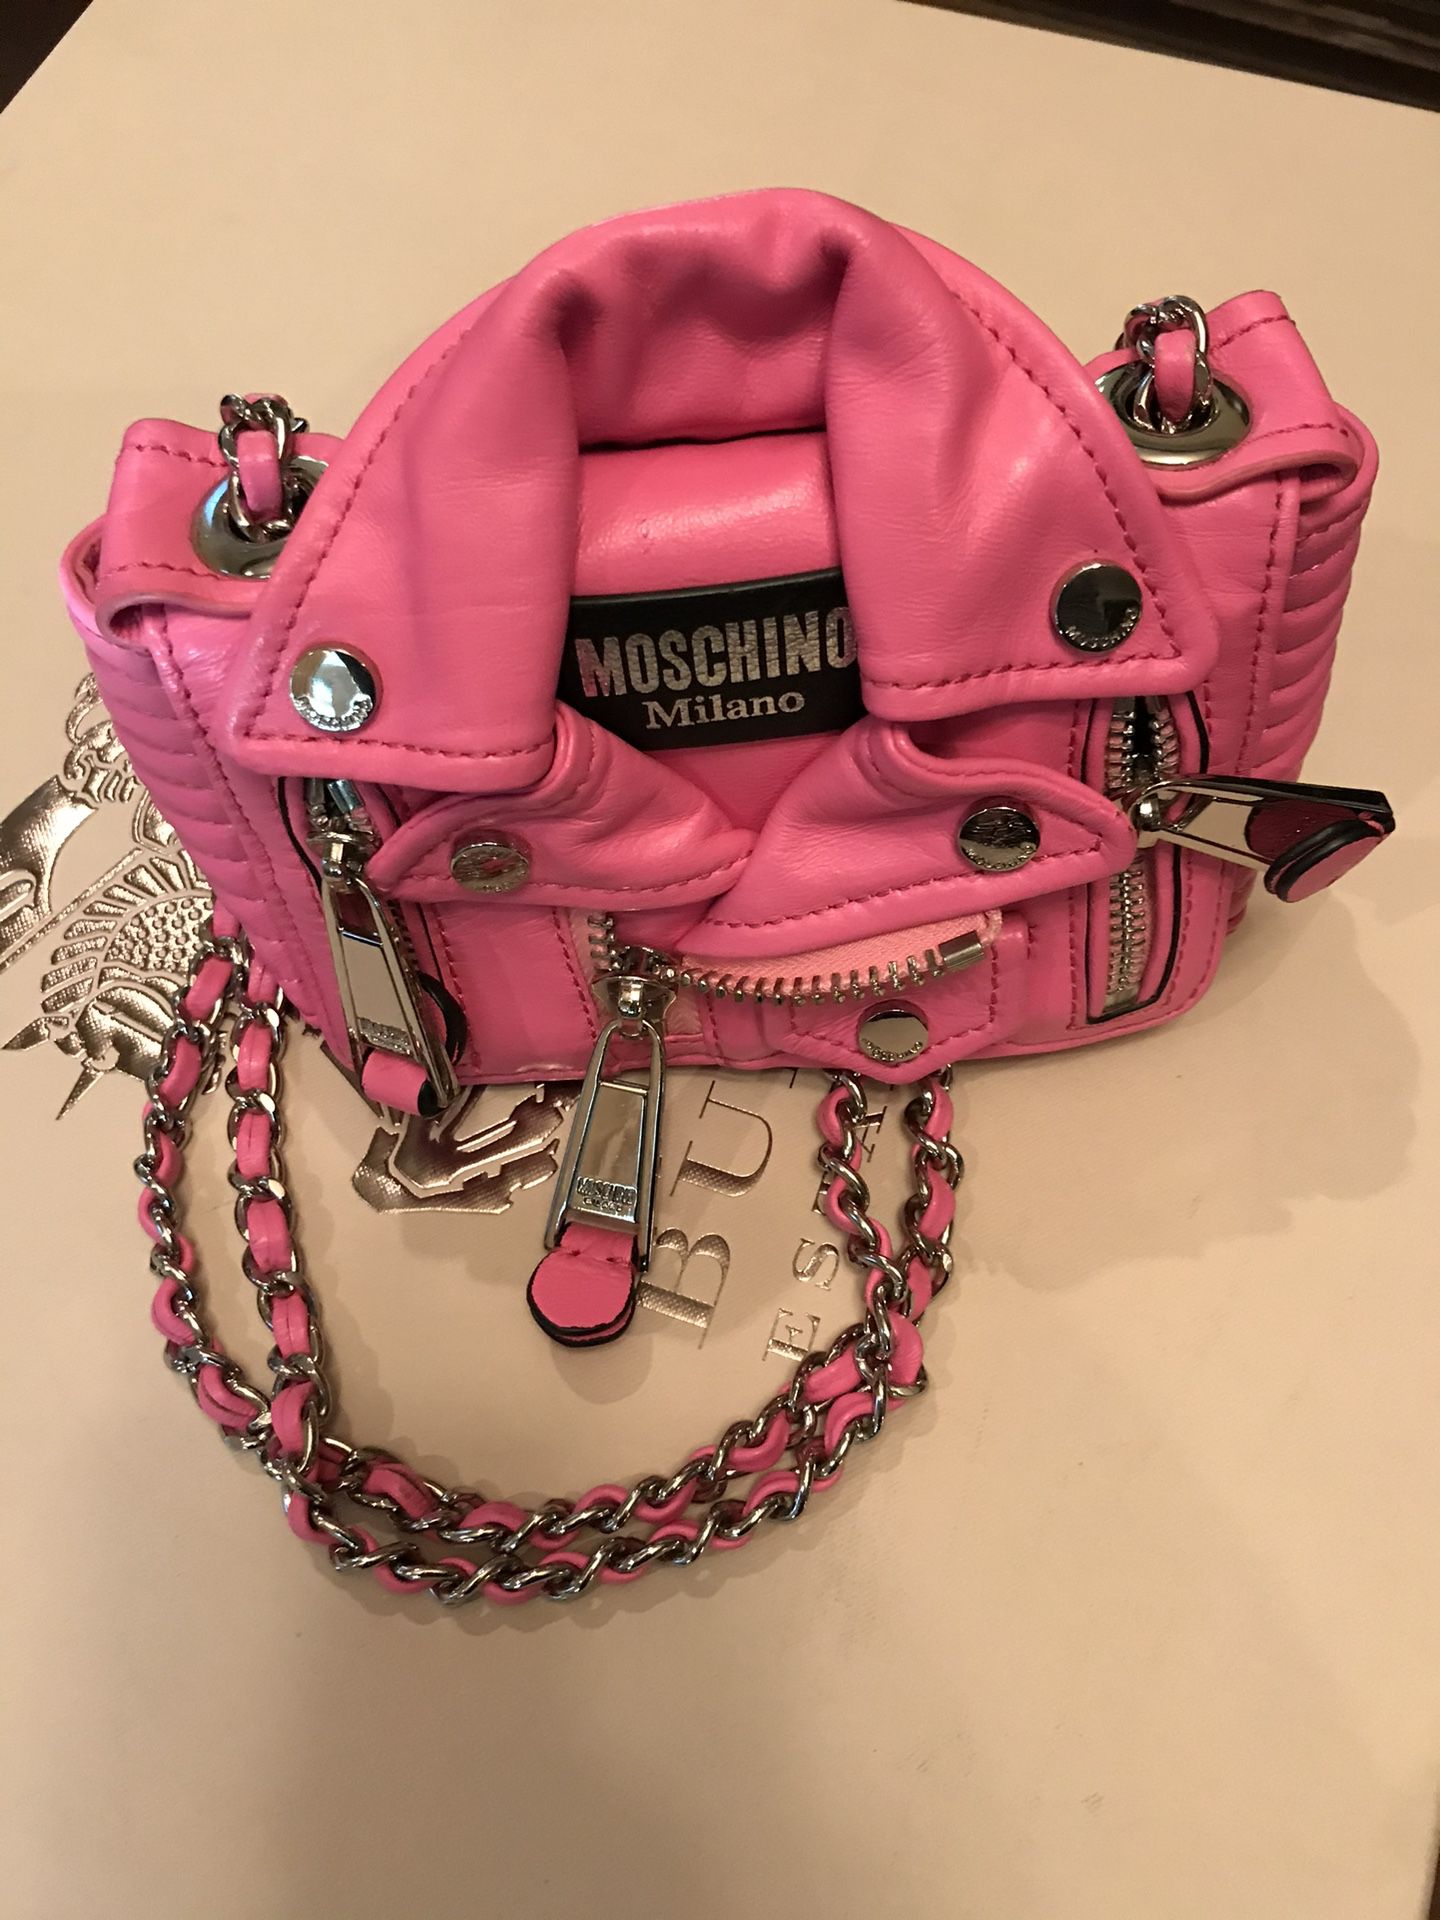 Moschino Milano Pink Biker Jacket Bag Crossbody Barbie Pink Chain shoulder like NEW